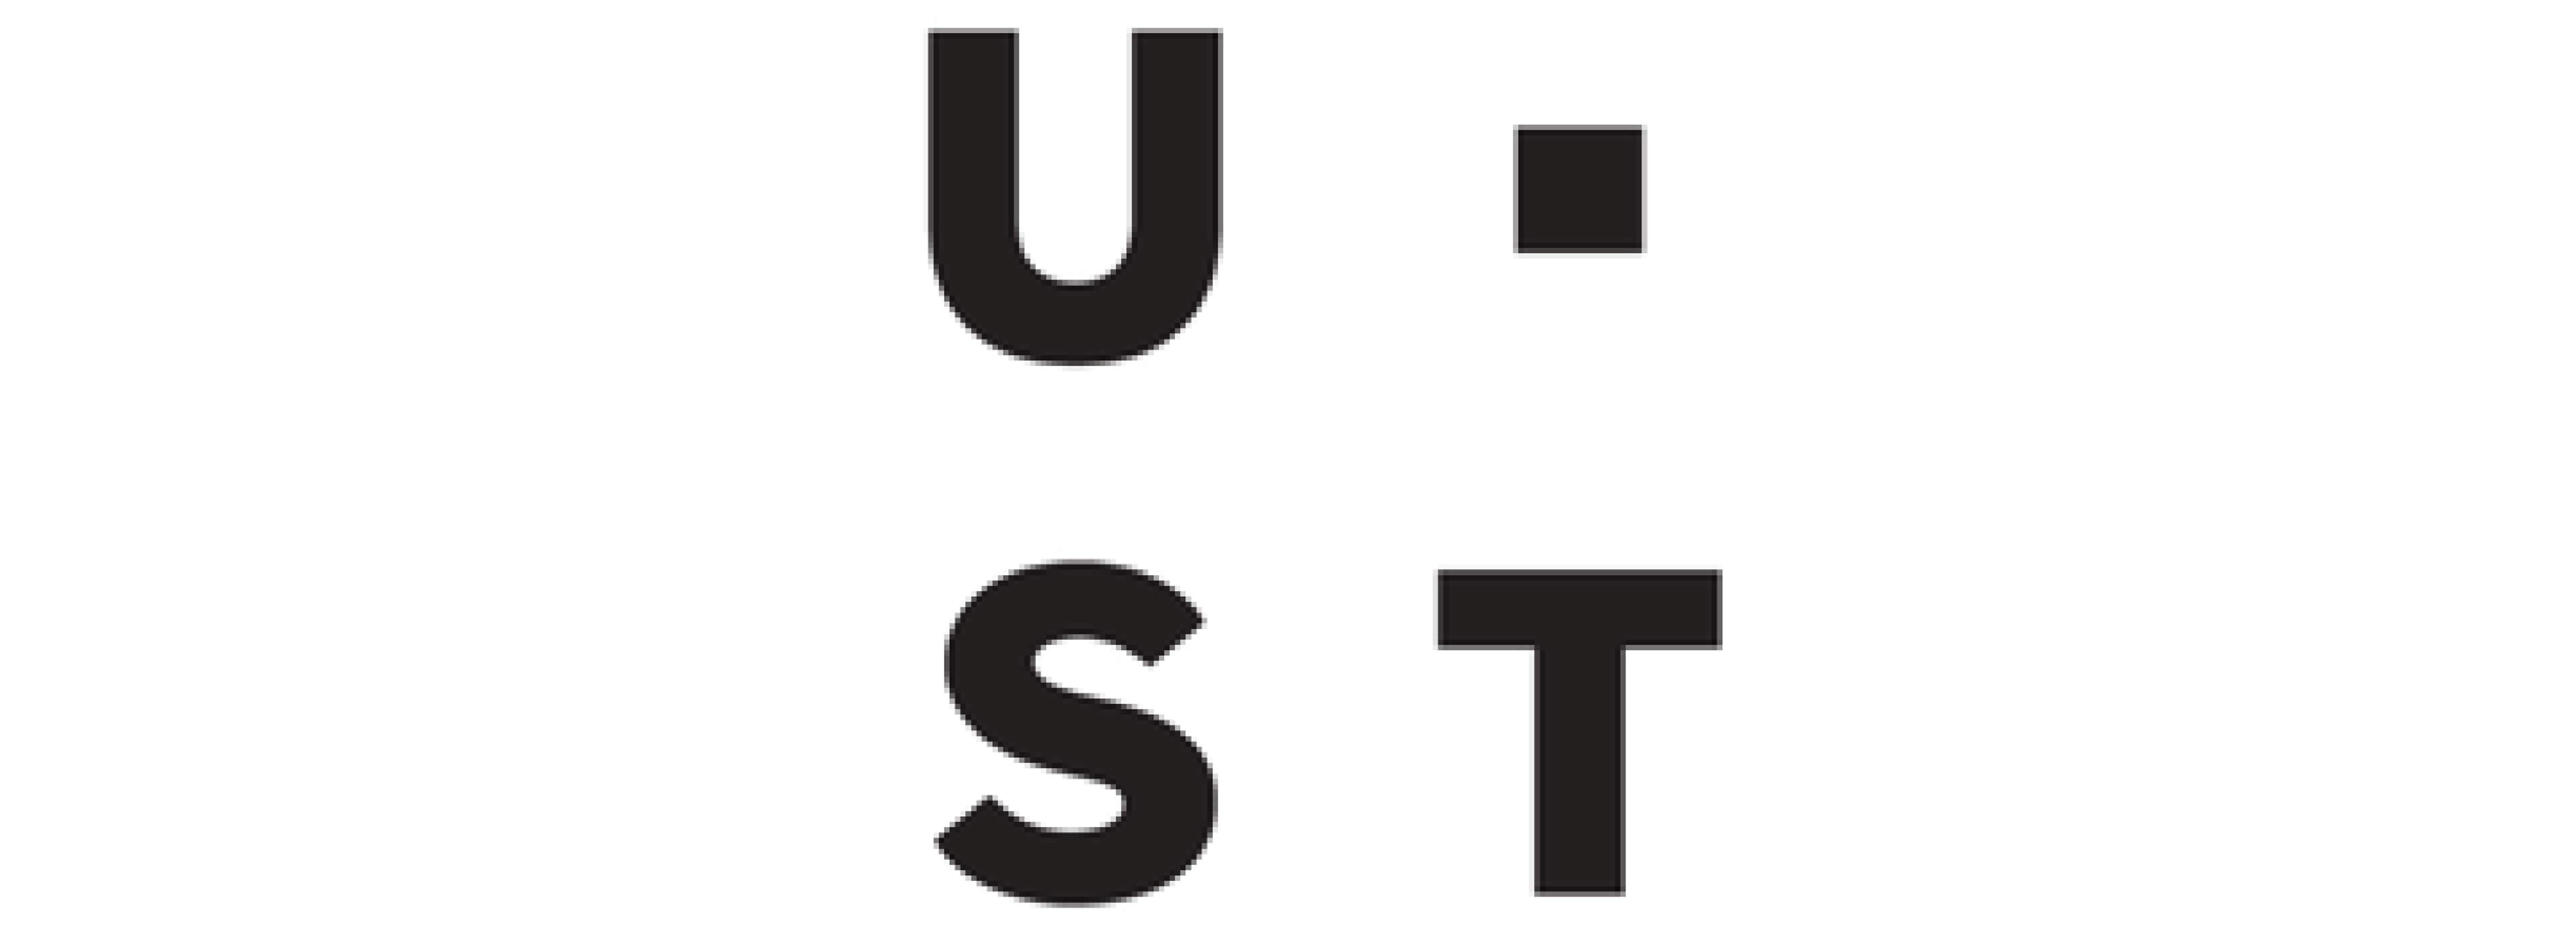 UST Global logo